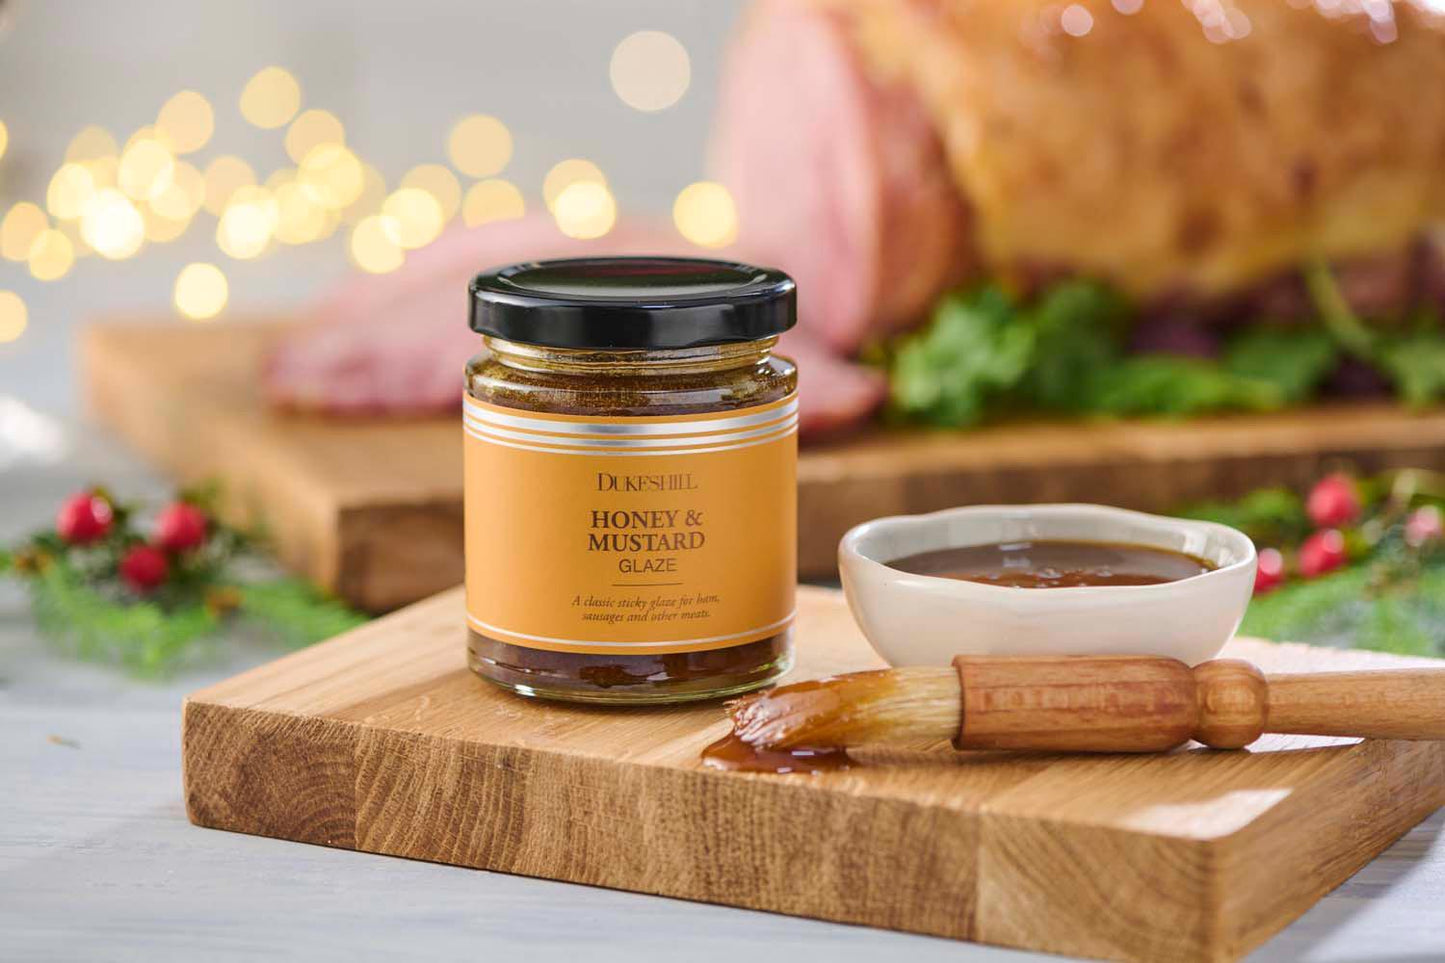 Honey & Mustard Glaze - DukesHill